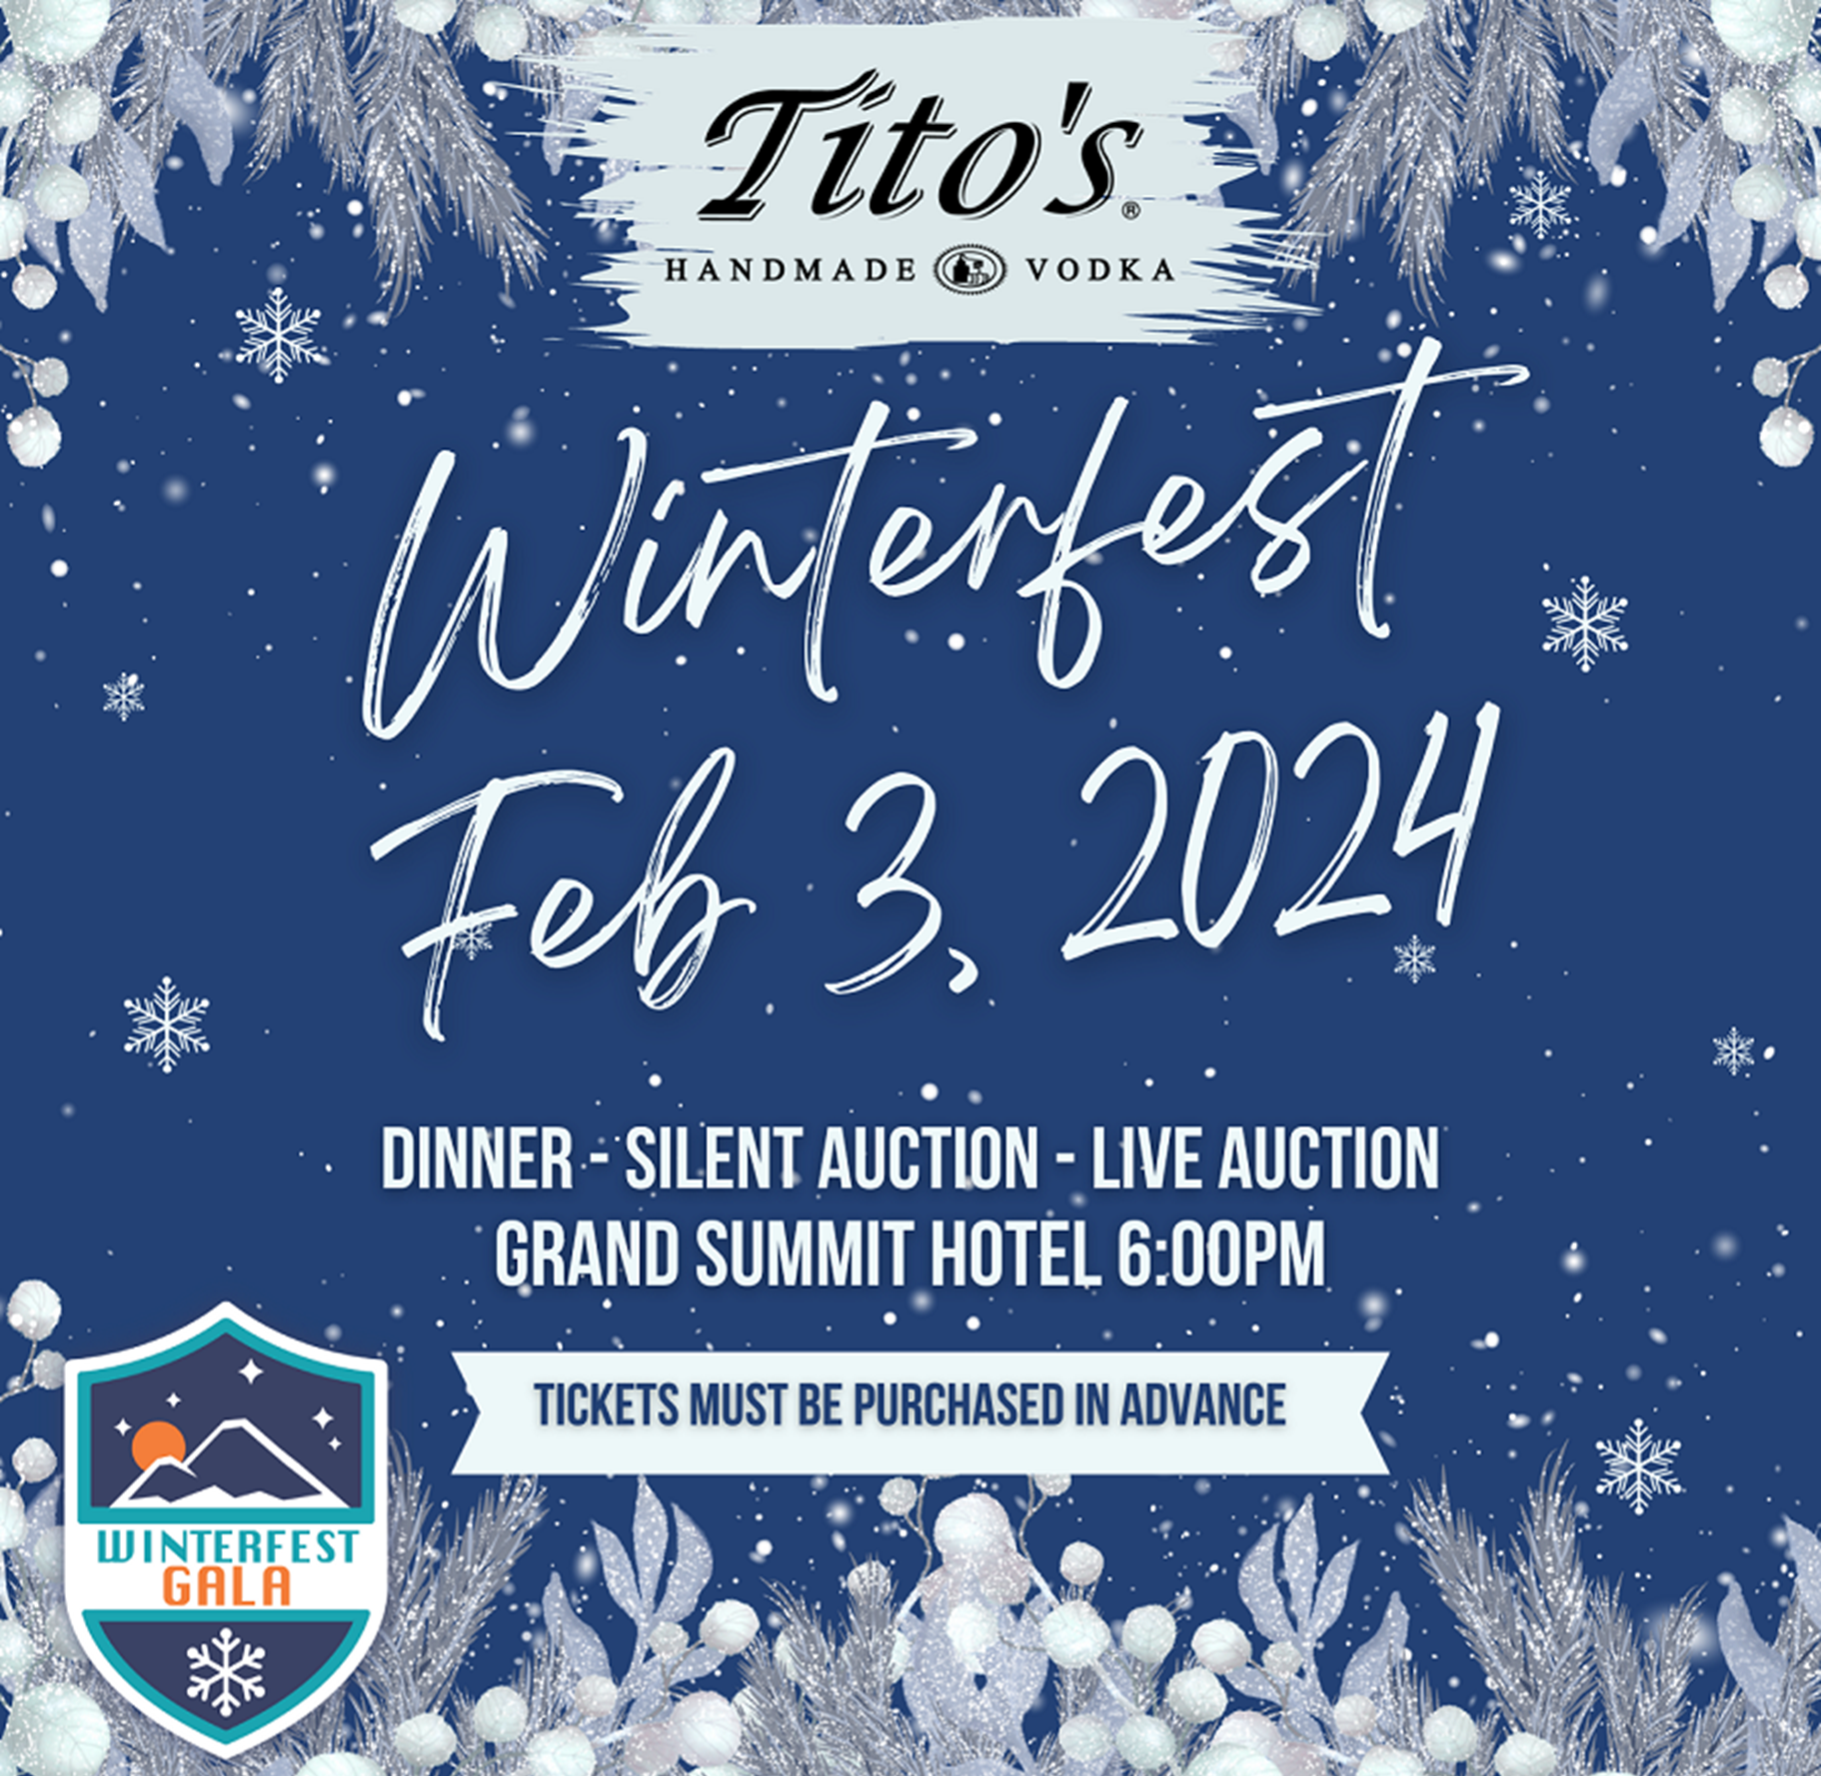 Après Ski: Glow in the Snow Disco Fundraiser Tickets, Fri, Feb 9, 2024 at  6:00 PM